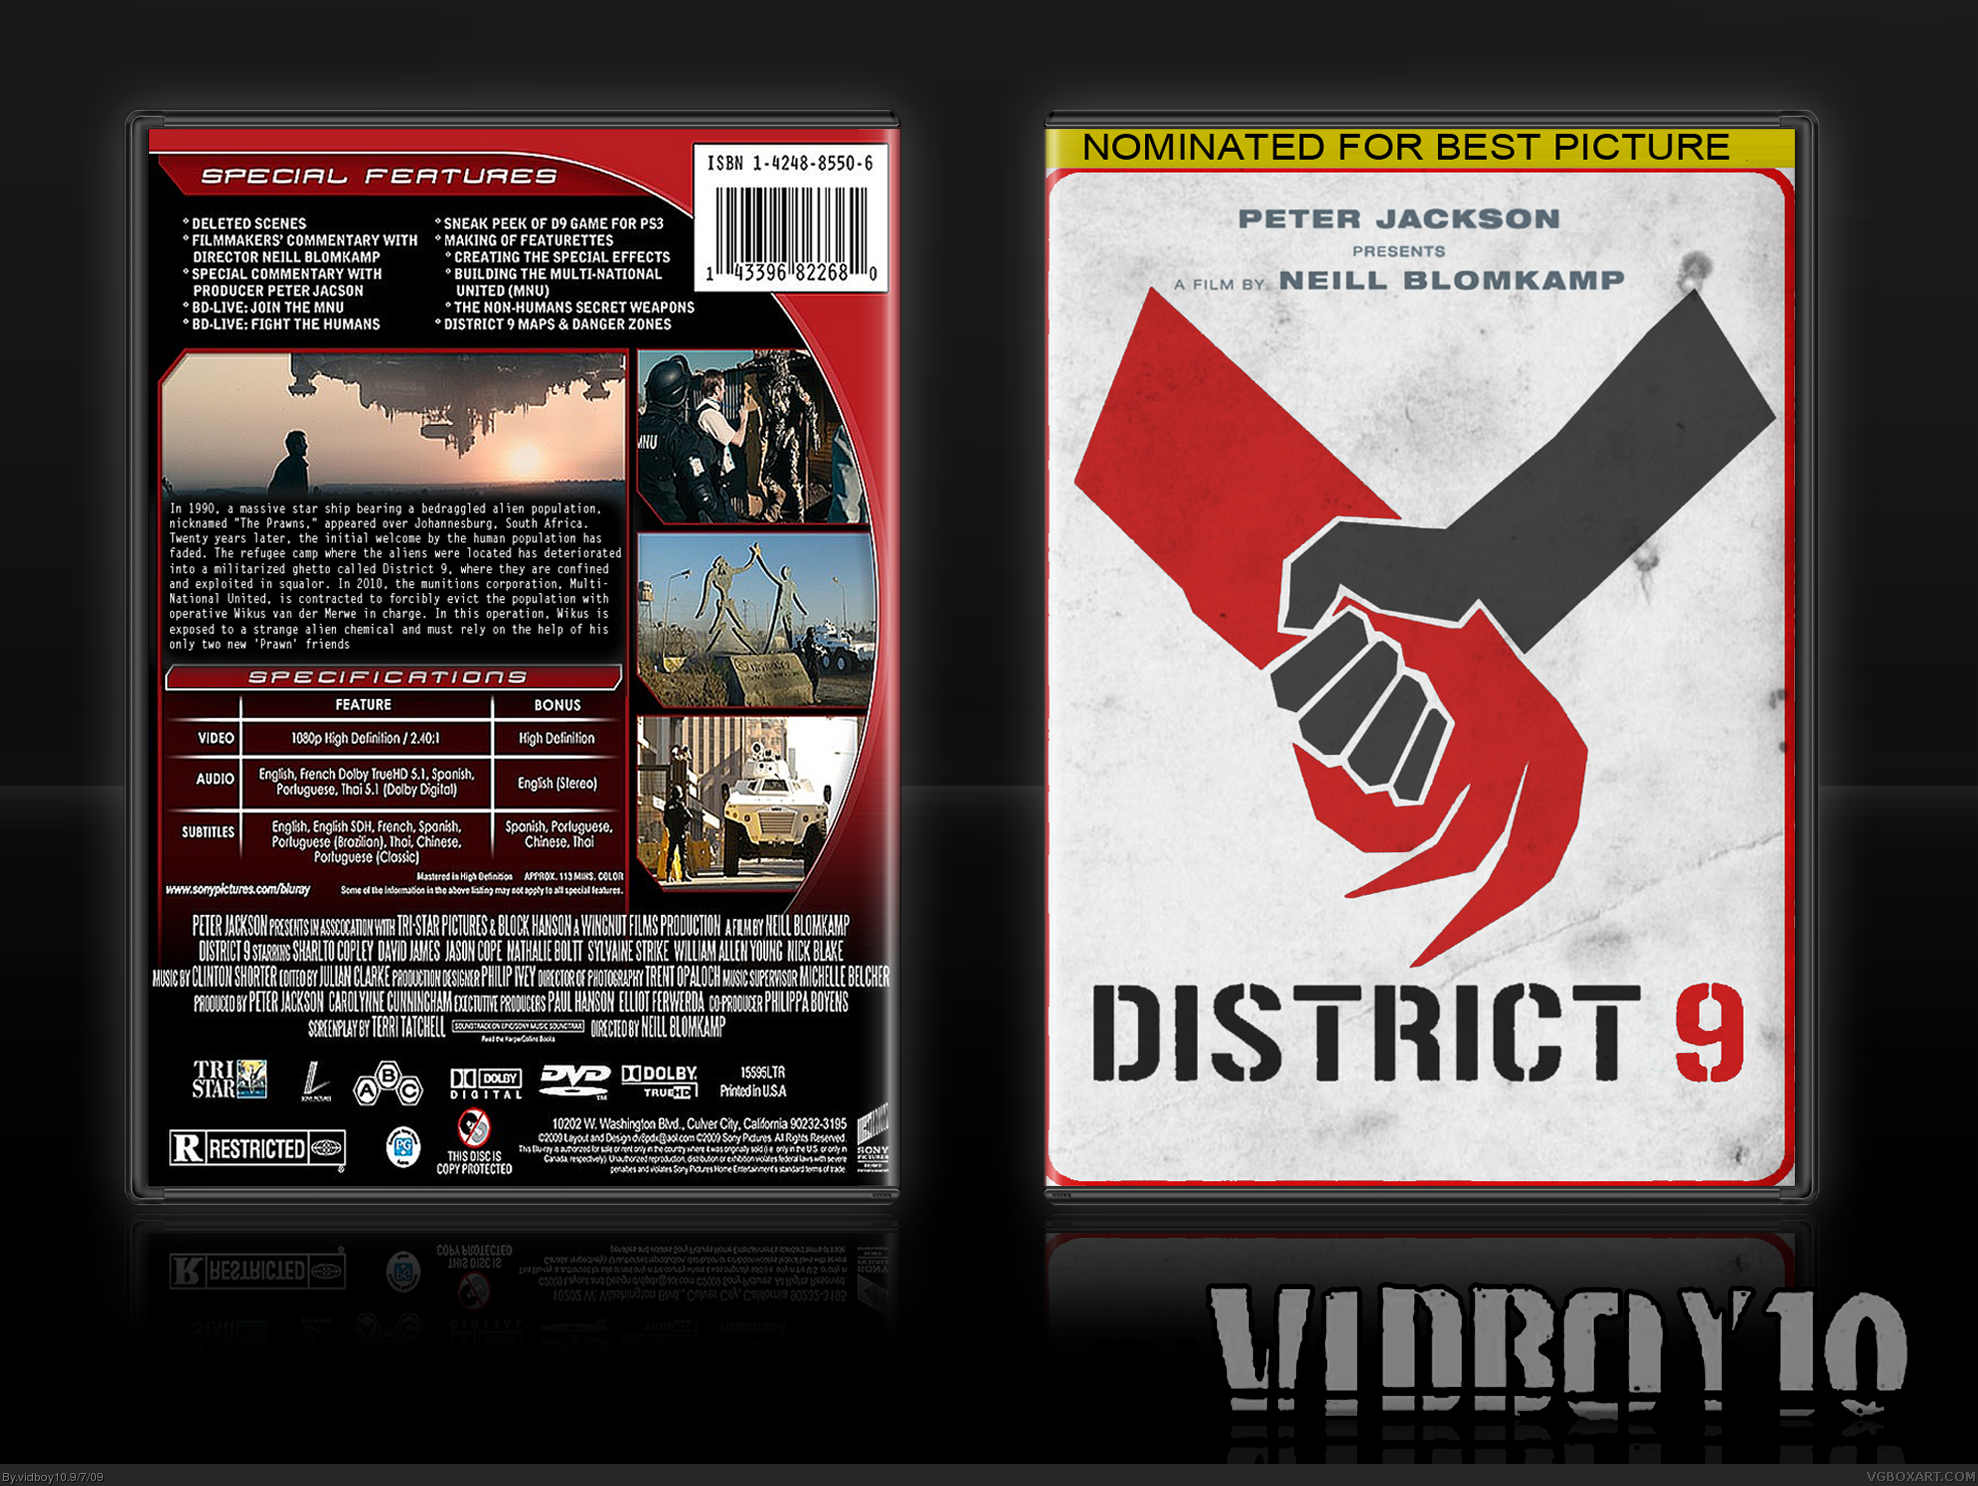 District 9 box cover